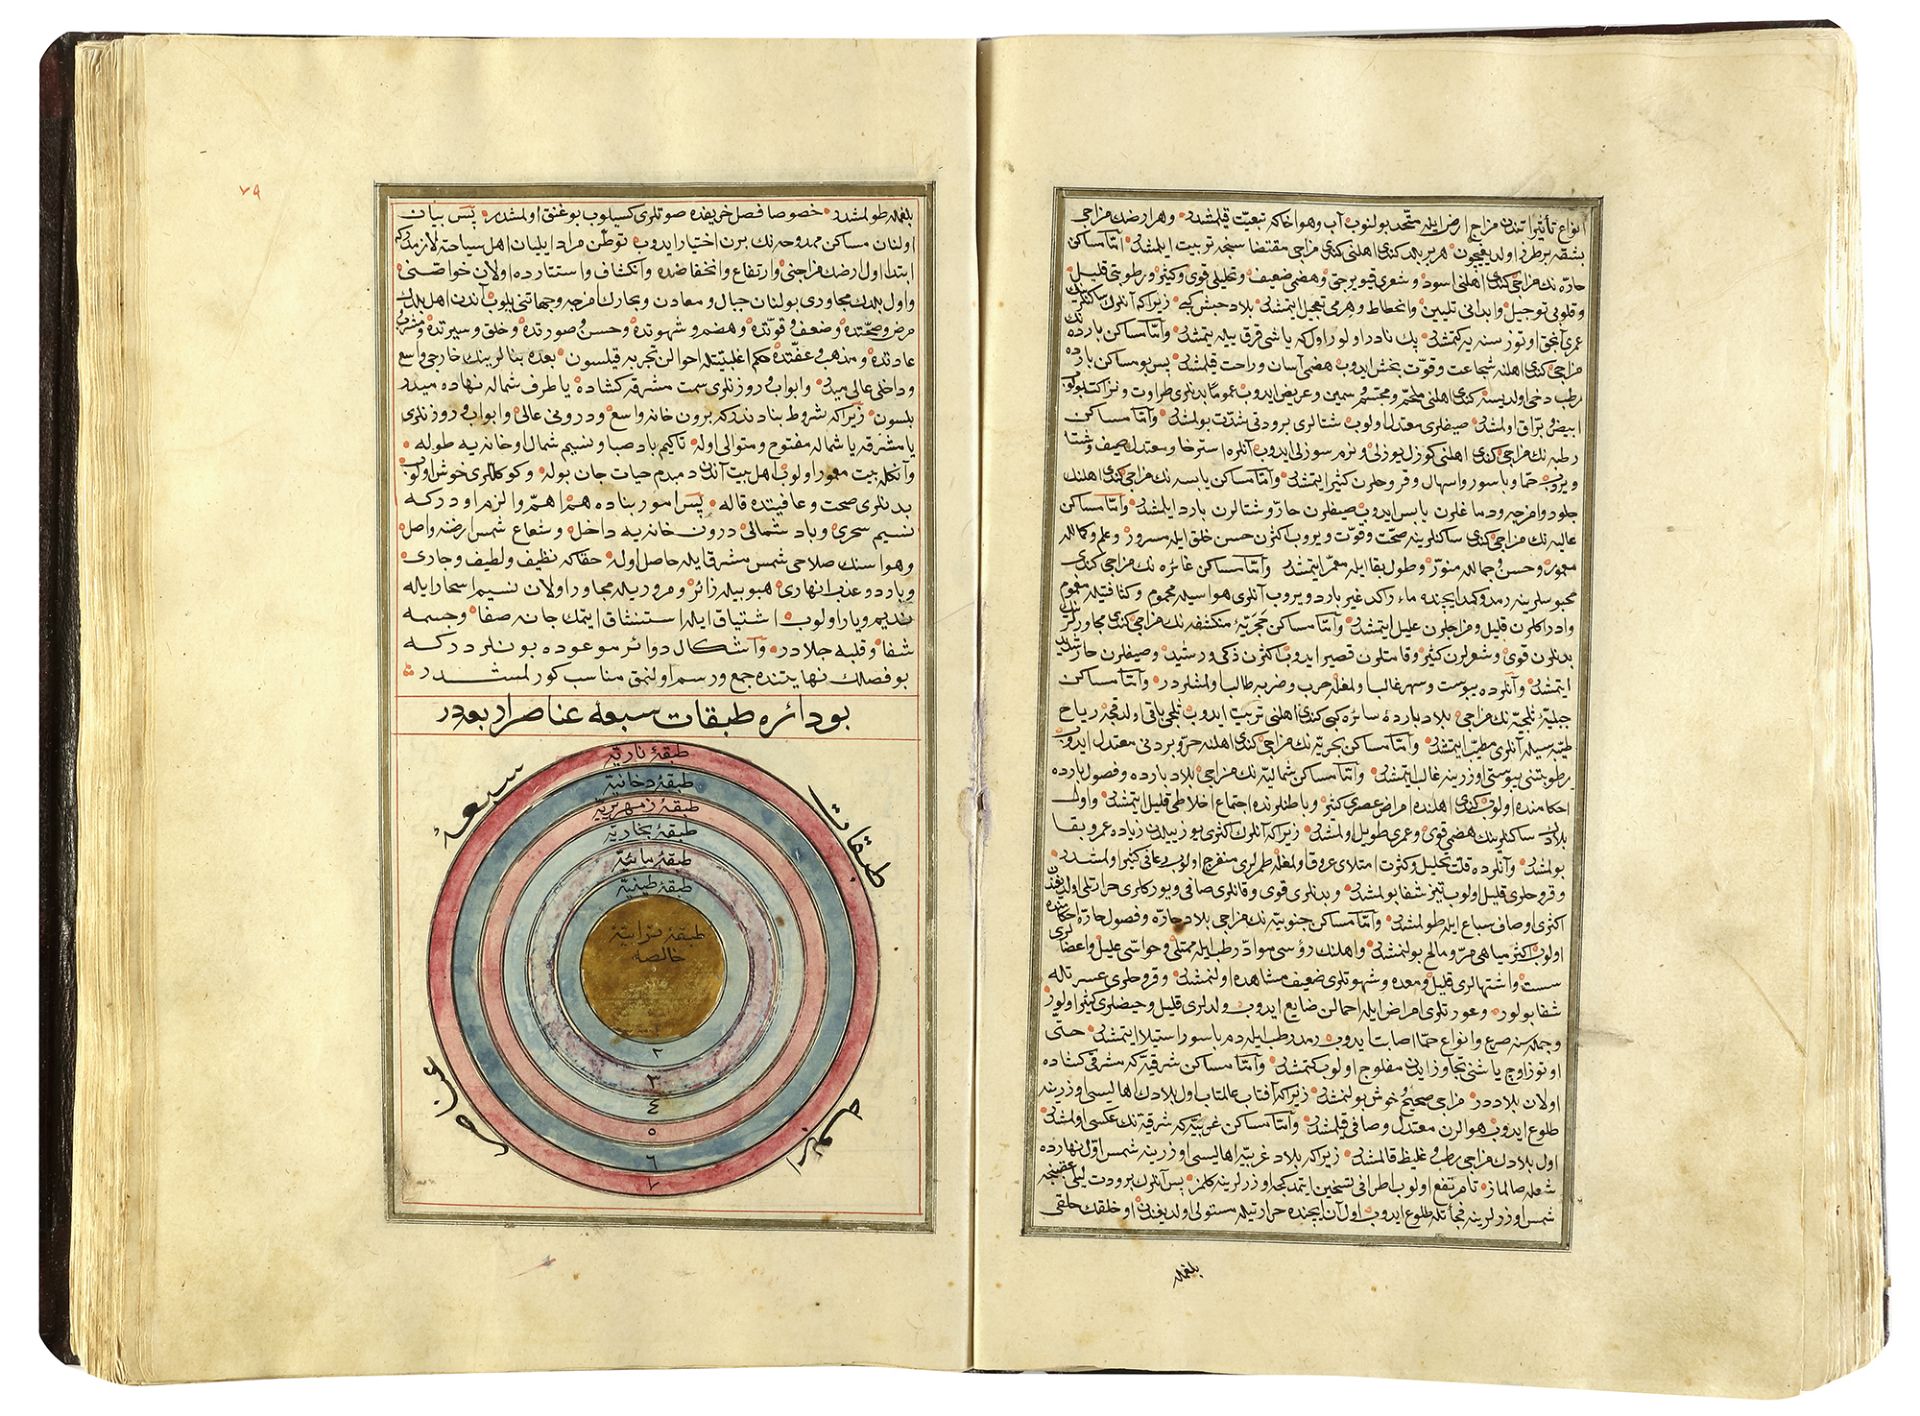 MARIFETNAME, IBRAHIM HAKKI, COPIED BY SAE'D ALLAH BIN ALI BIN AHMED, TURKEY, 1221 AH/1806 AD - Bild 33 aus 58